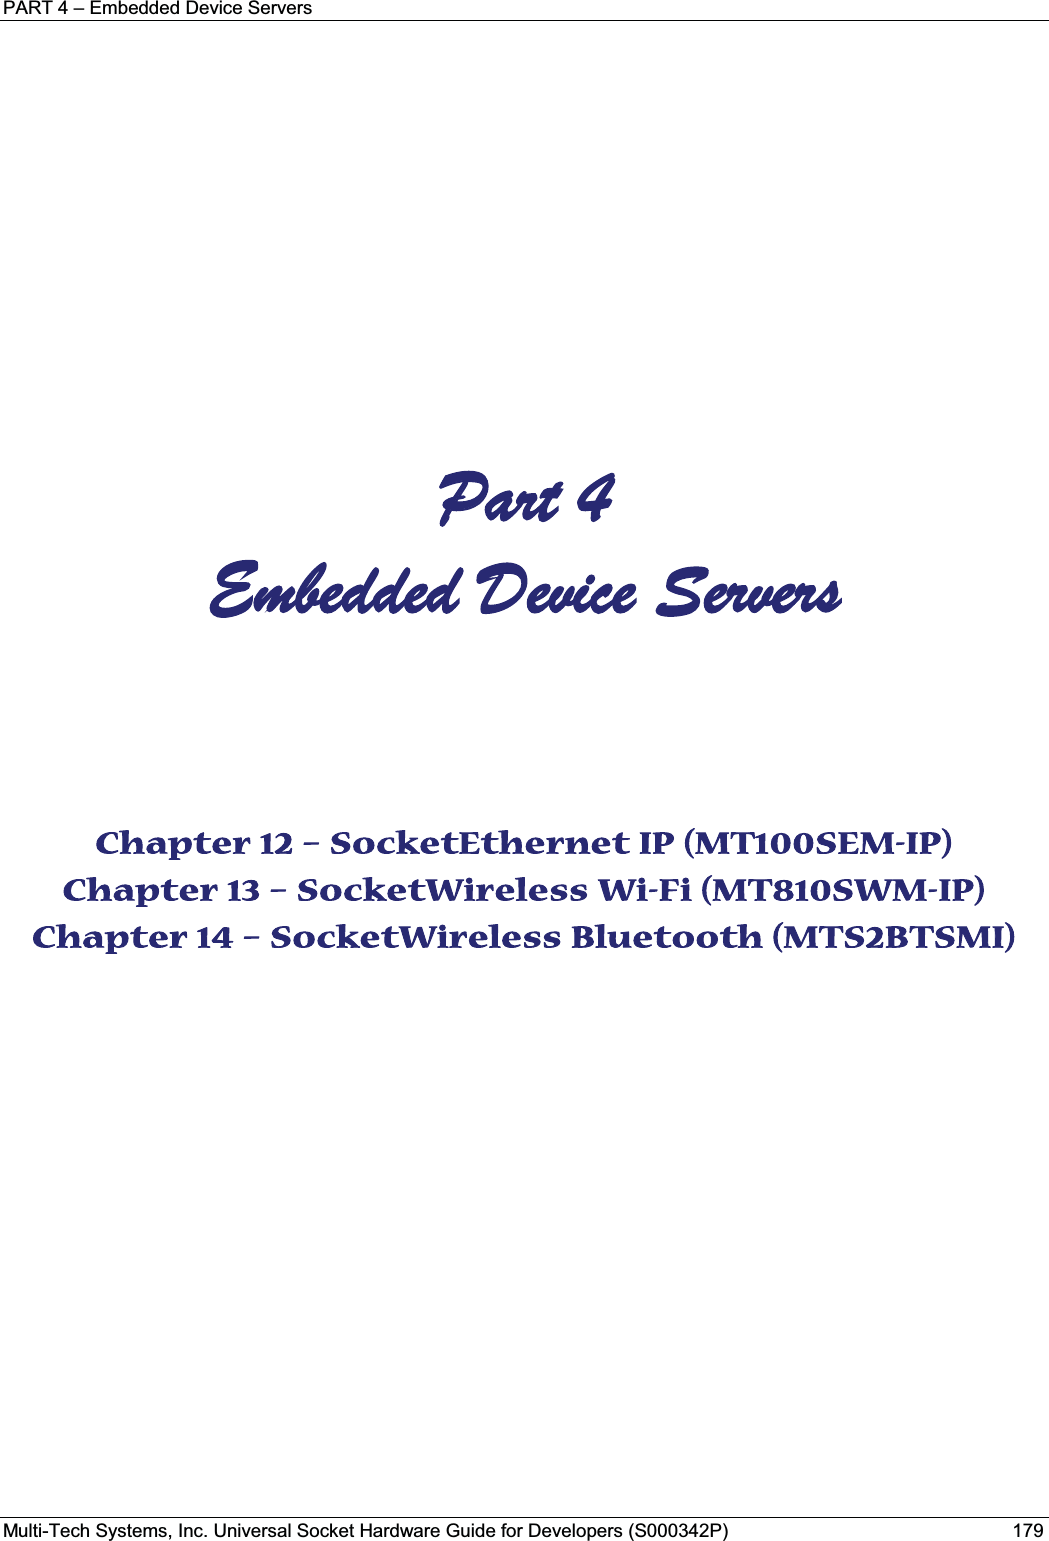 PART 4 – Embedded Device ServersMulti-Tech Systems, Inc. Universal Socket Hardware Guide for Developers (S000342P) 179PPart 4 Embedded Device Servers    Chapter 12 – SocketEthernet IP (MT100SEM-IP) Chapter 13 – SocketWireless Wi-Fi (MT810SWM-IP) Chapter 14 – SocketWireless Bluetooth (MTS2BTSMI)   